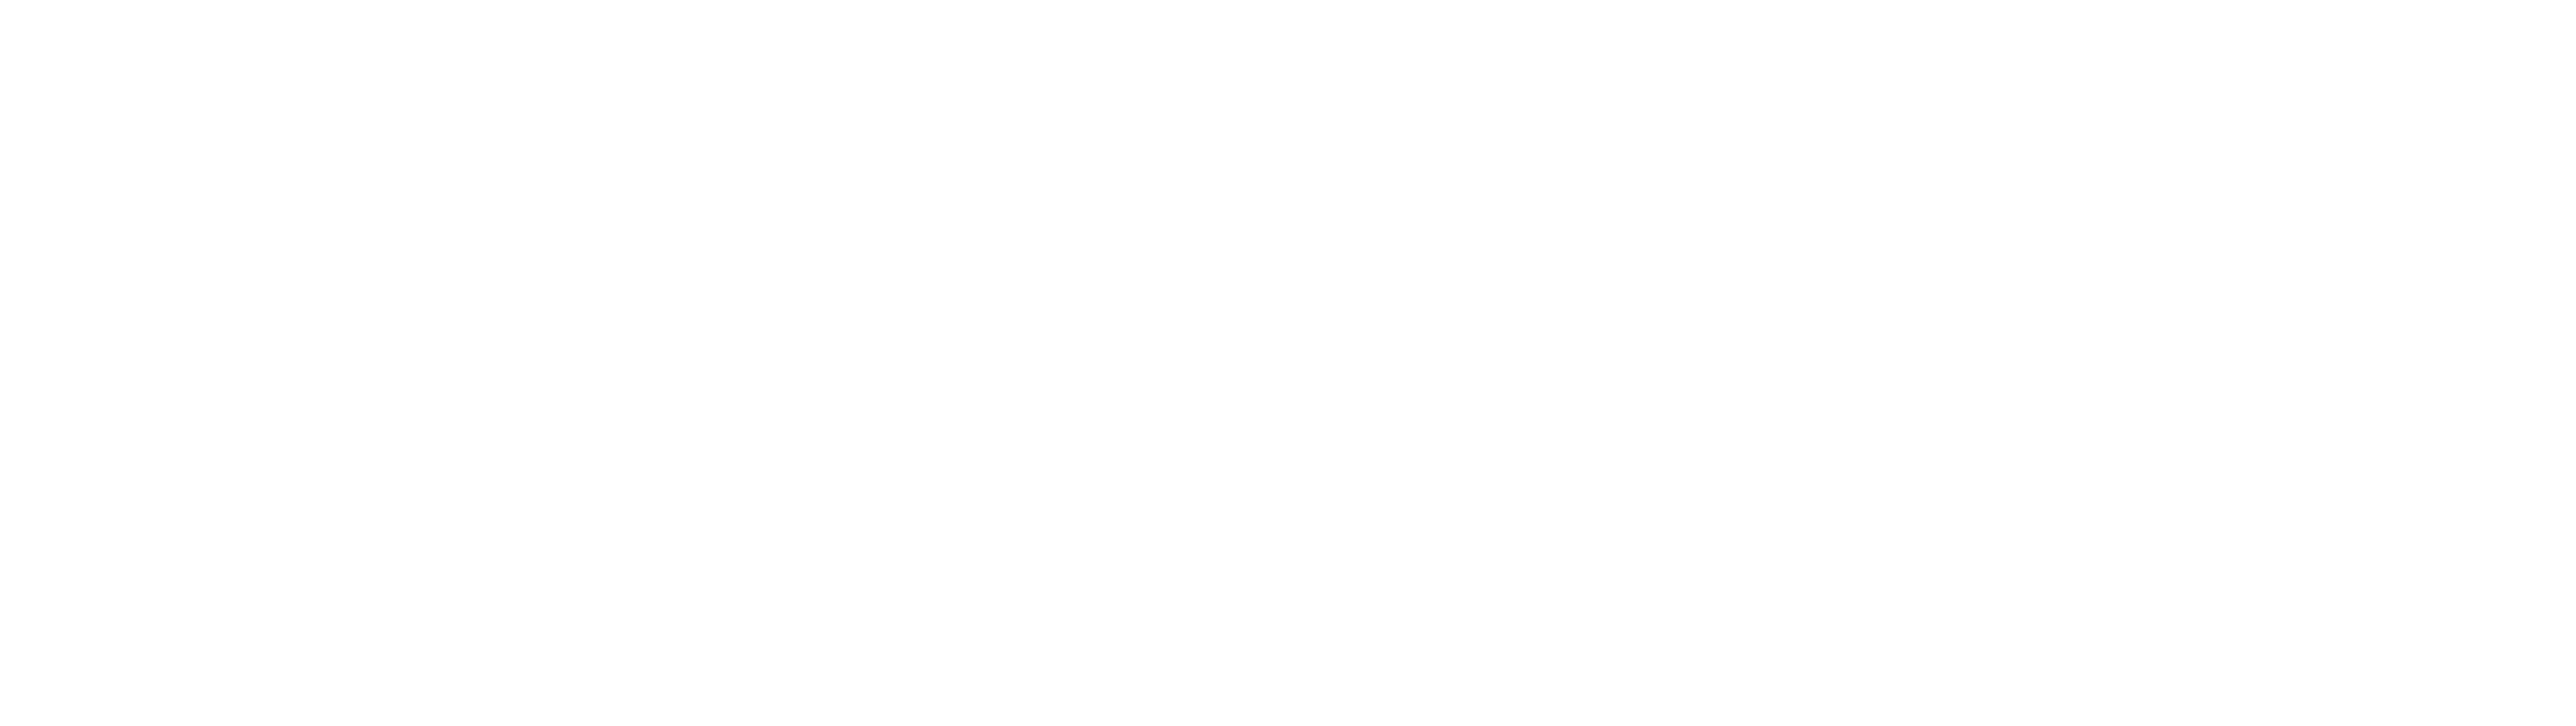 Web Business Listings